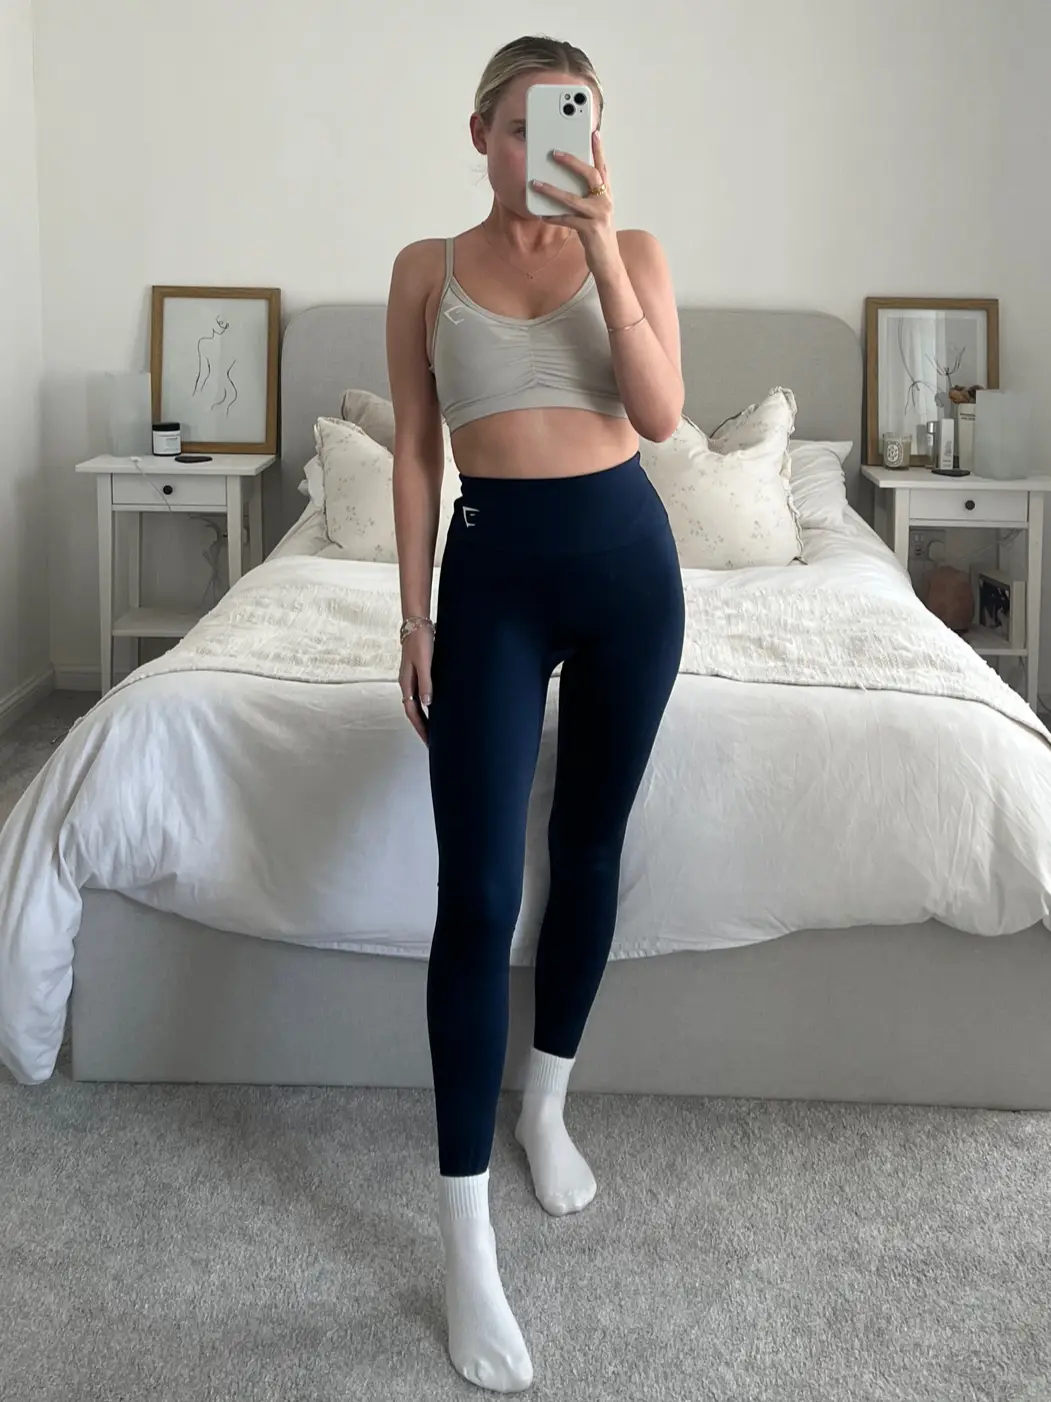 129 fitness black chick in tight yoga pants cameltoe selfie